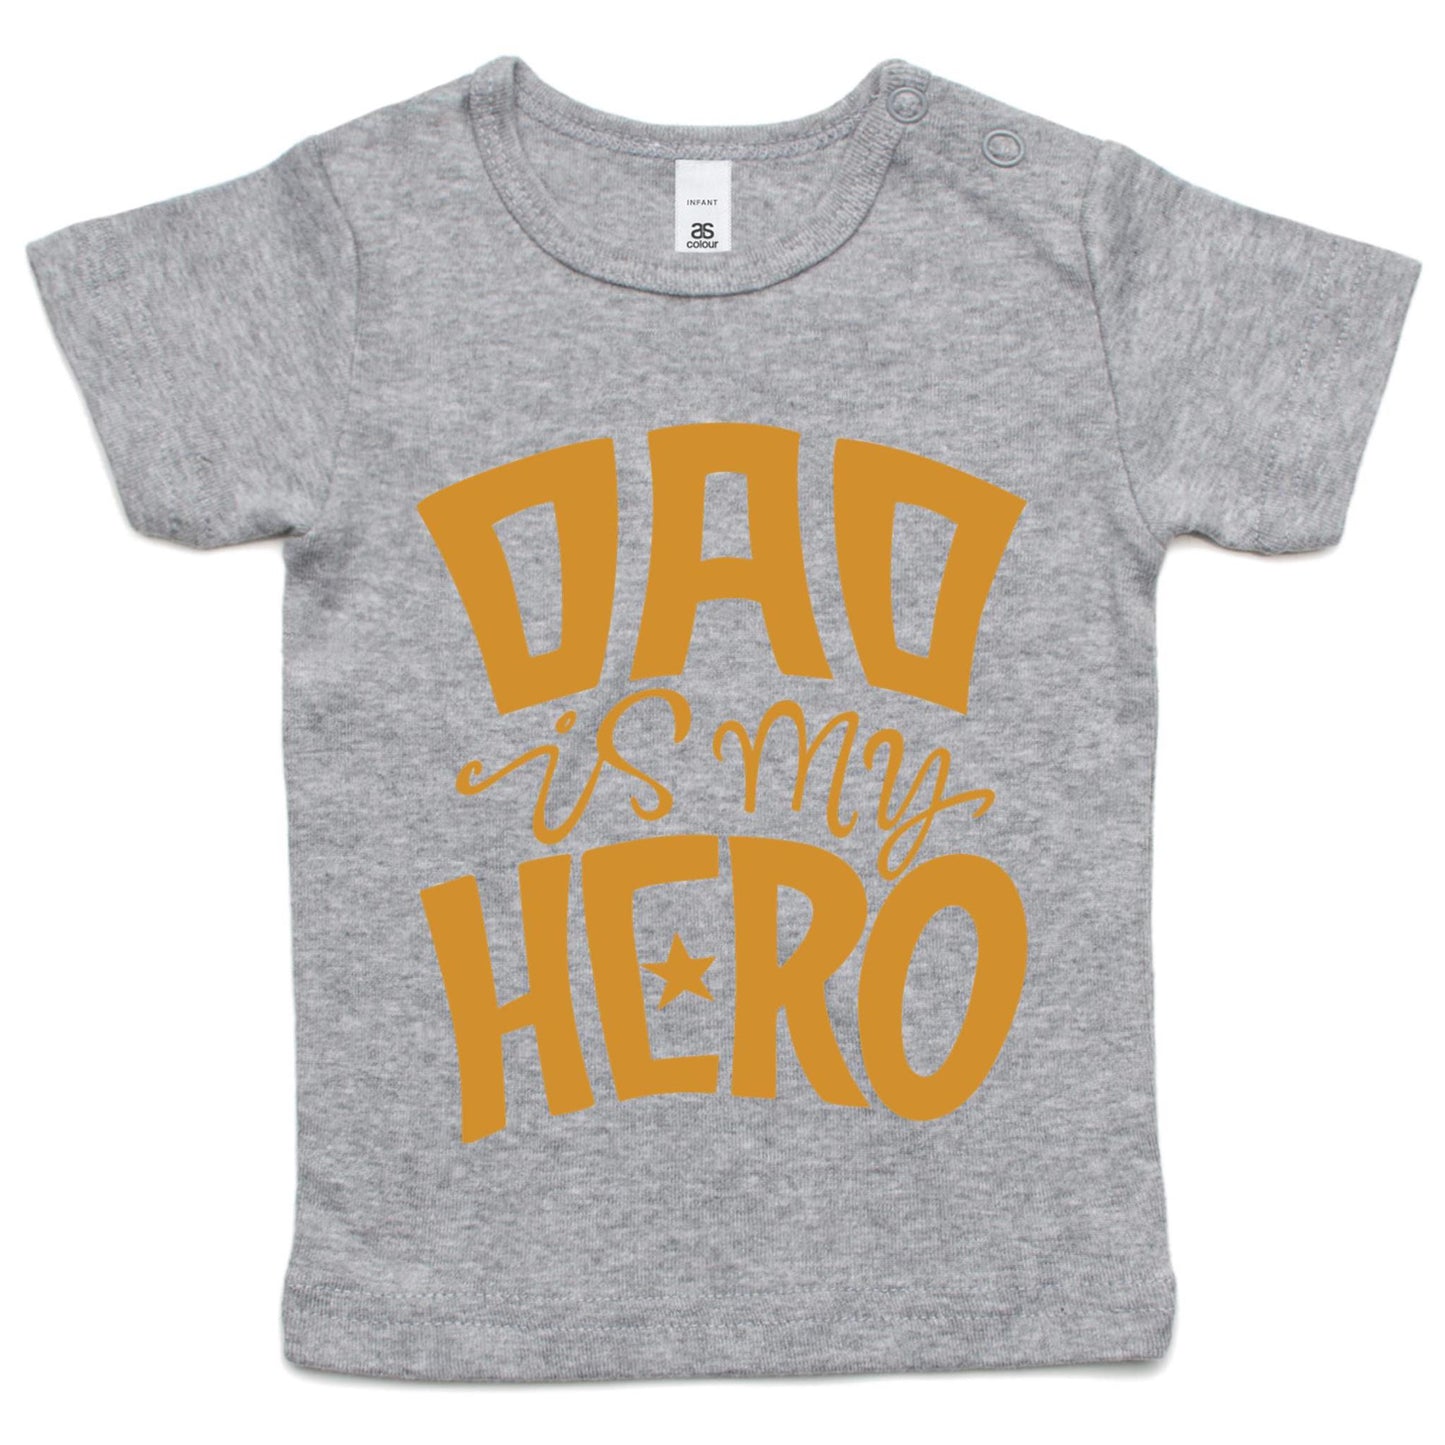 Dad Is My Hero - Baby T-shirt Grey Marle Baby T-shirt Dad